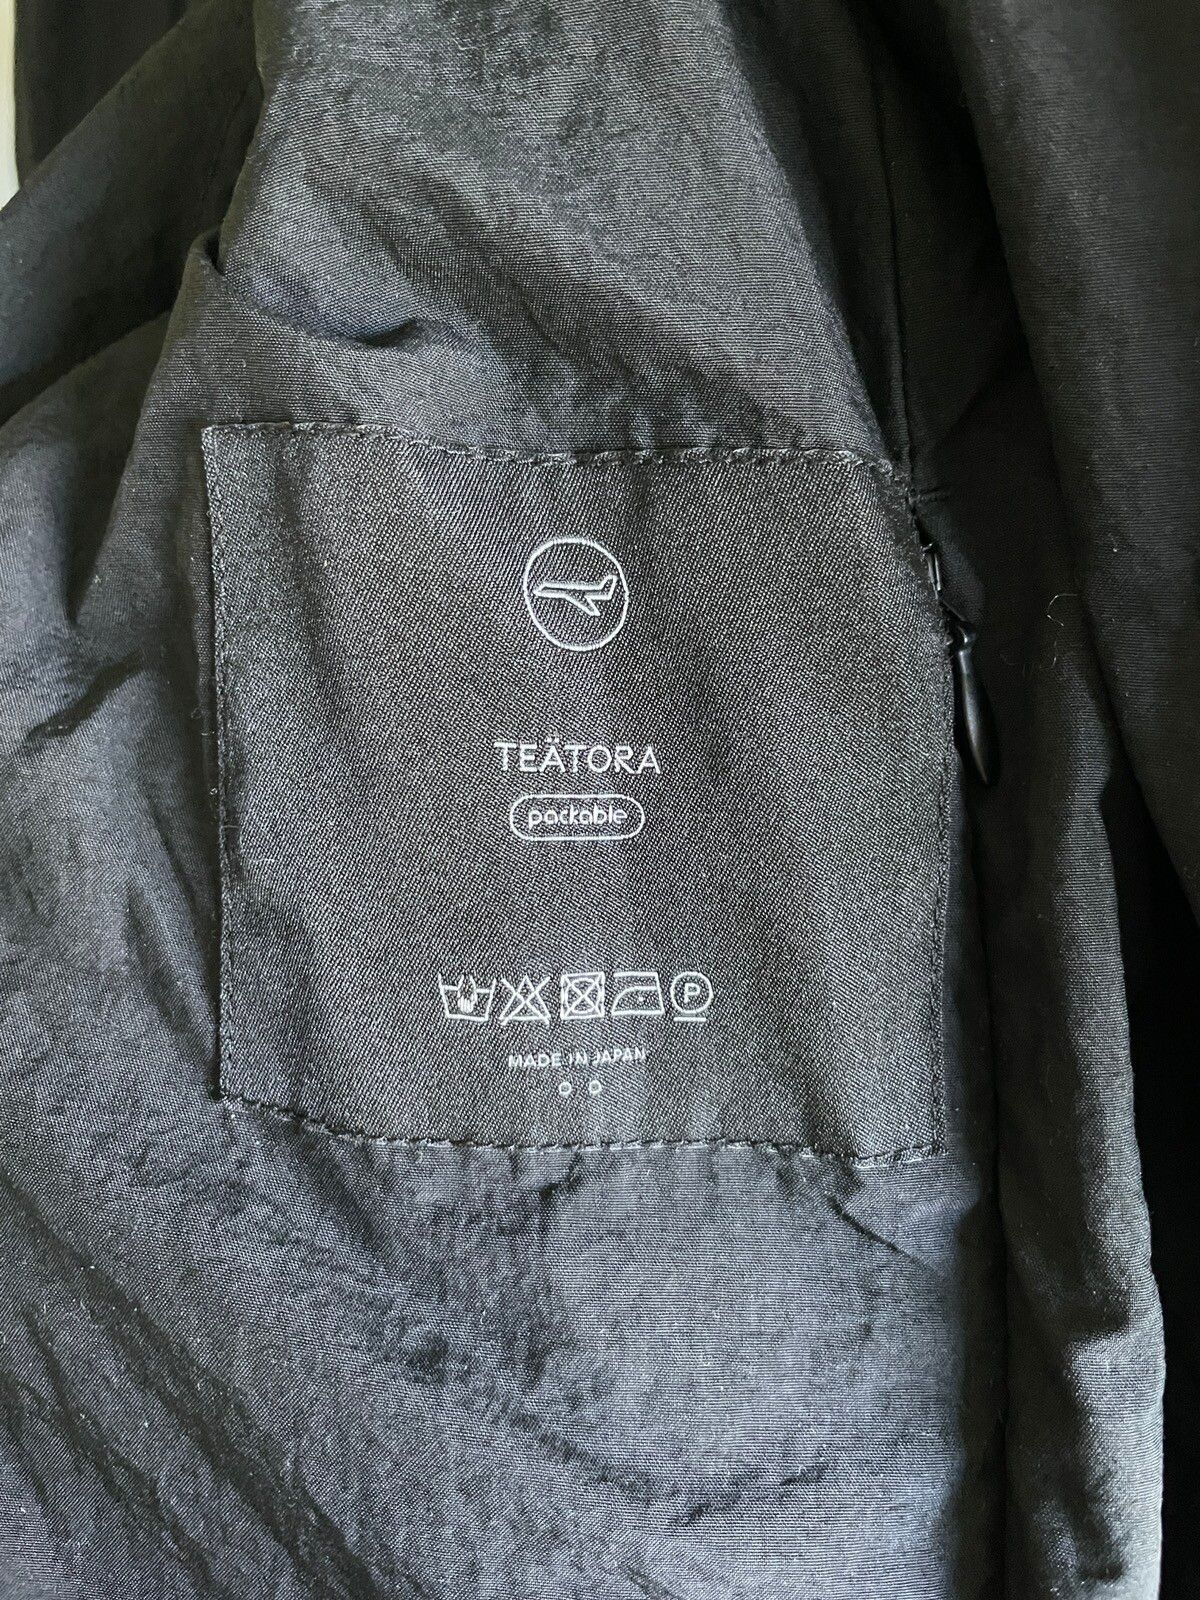 Teatora Packable Device Jacket | Grailed